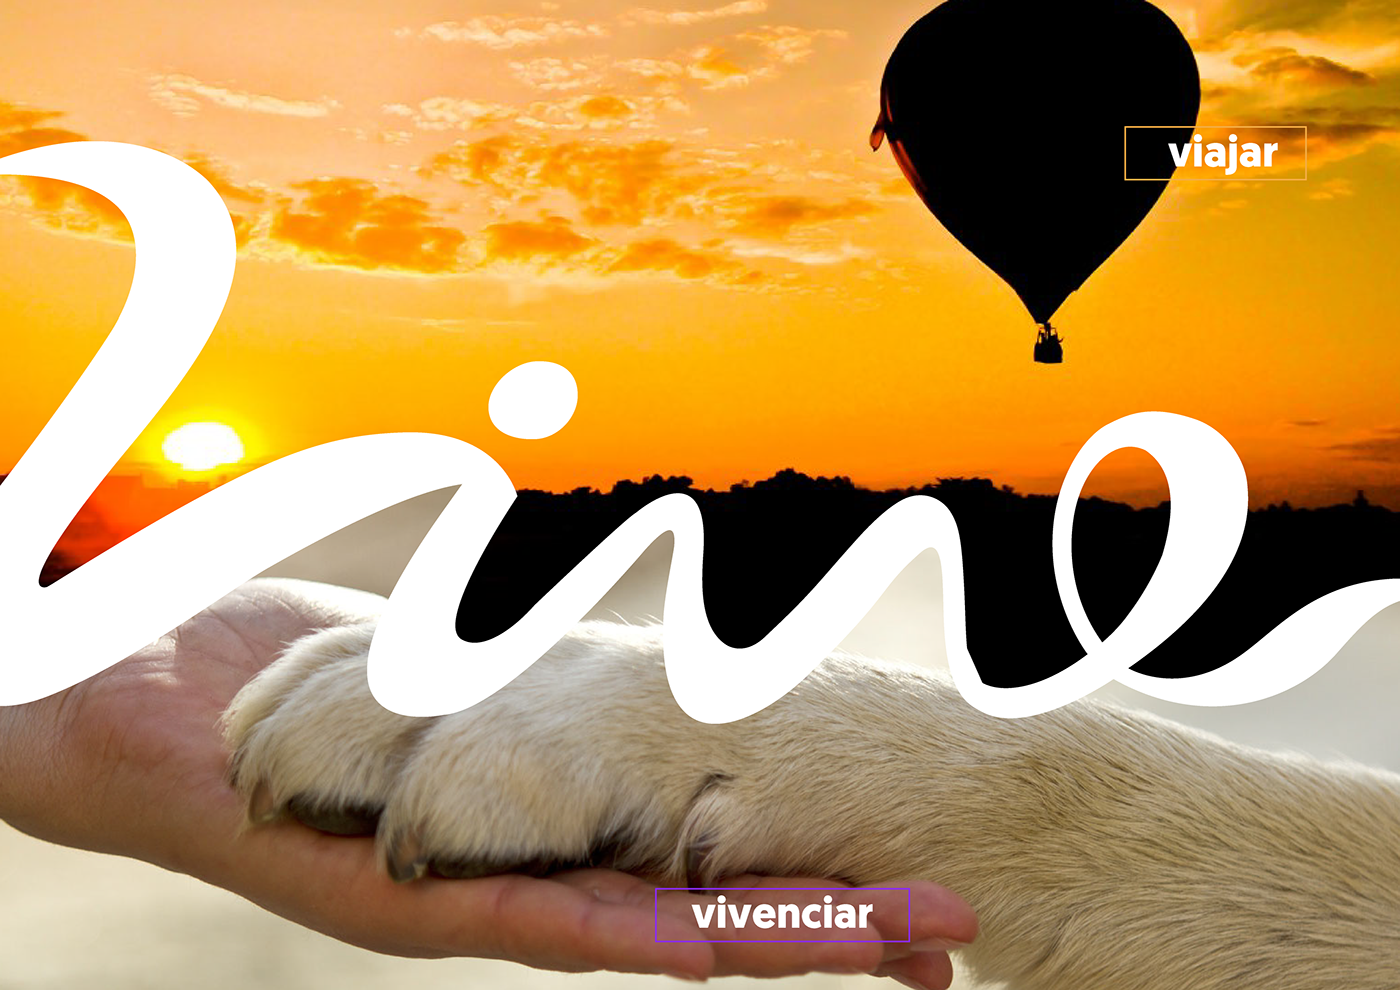 live-one-trip Travelling purposes manifesto stationary Web Design  brand graphic design  logo